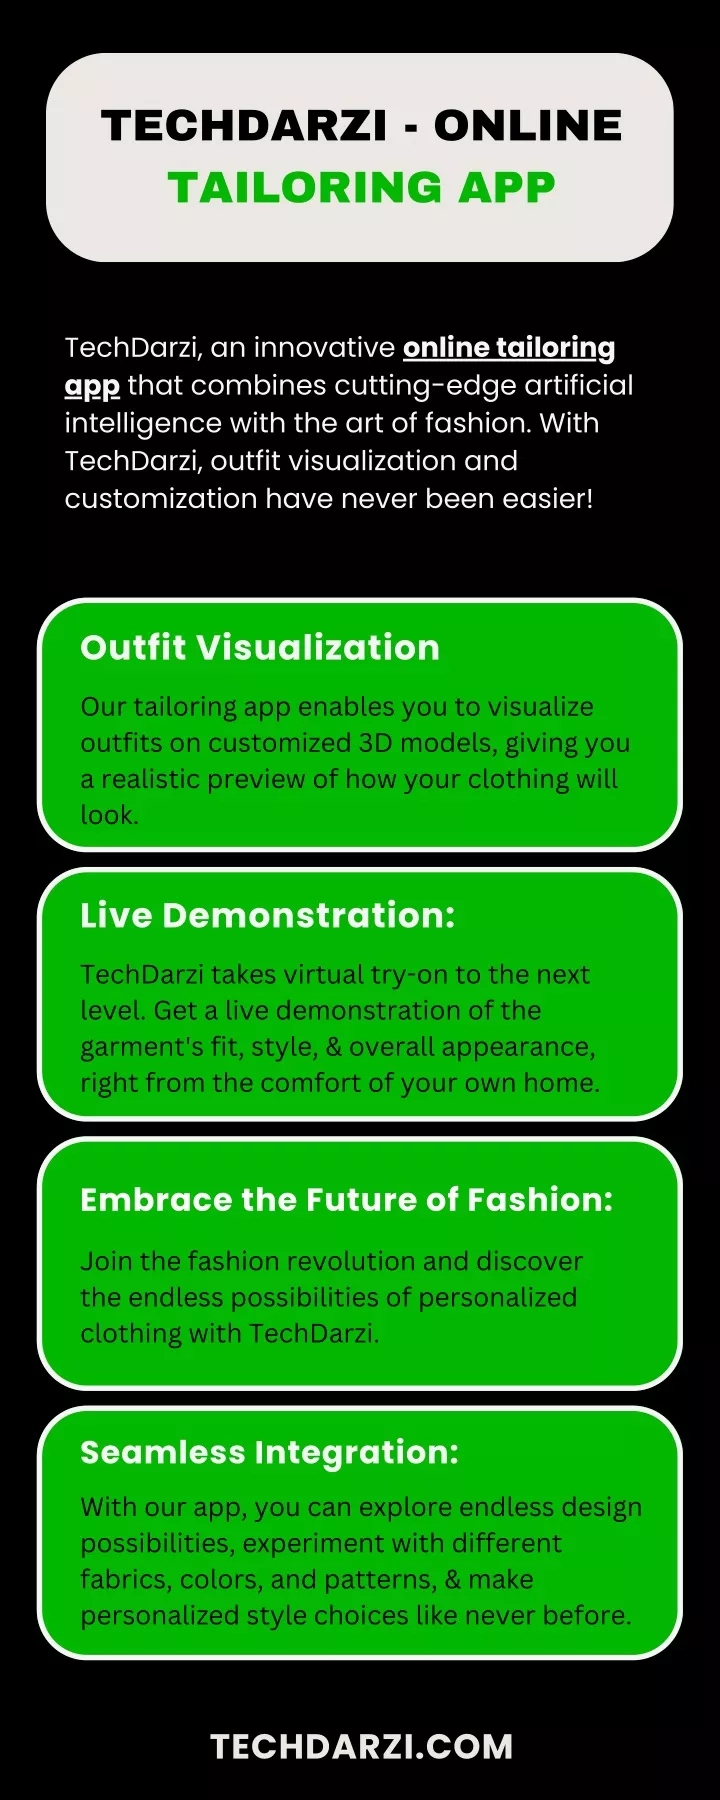 techdarzi online tailoring app